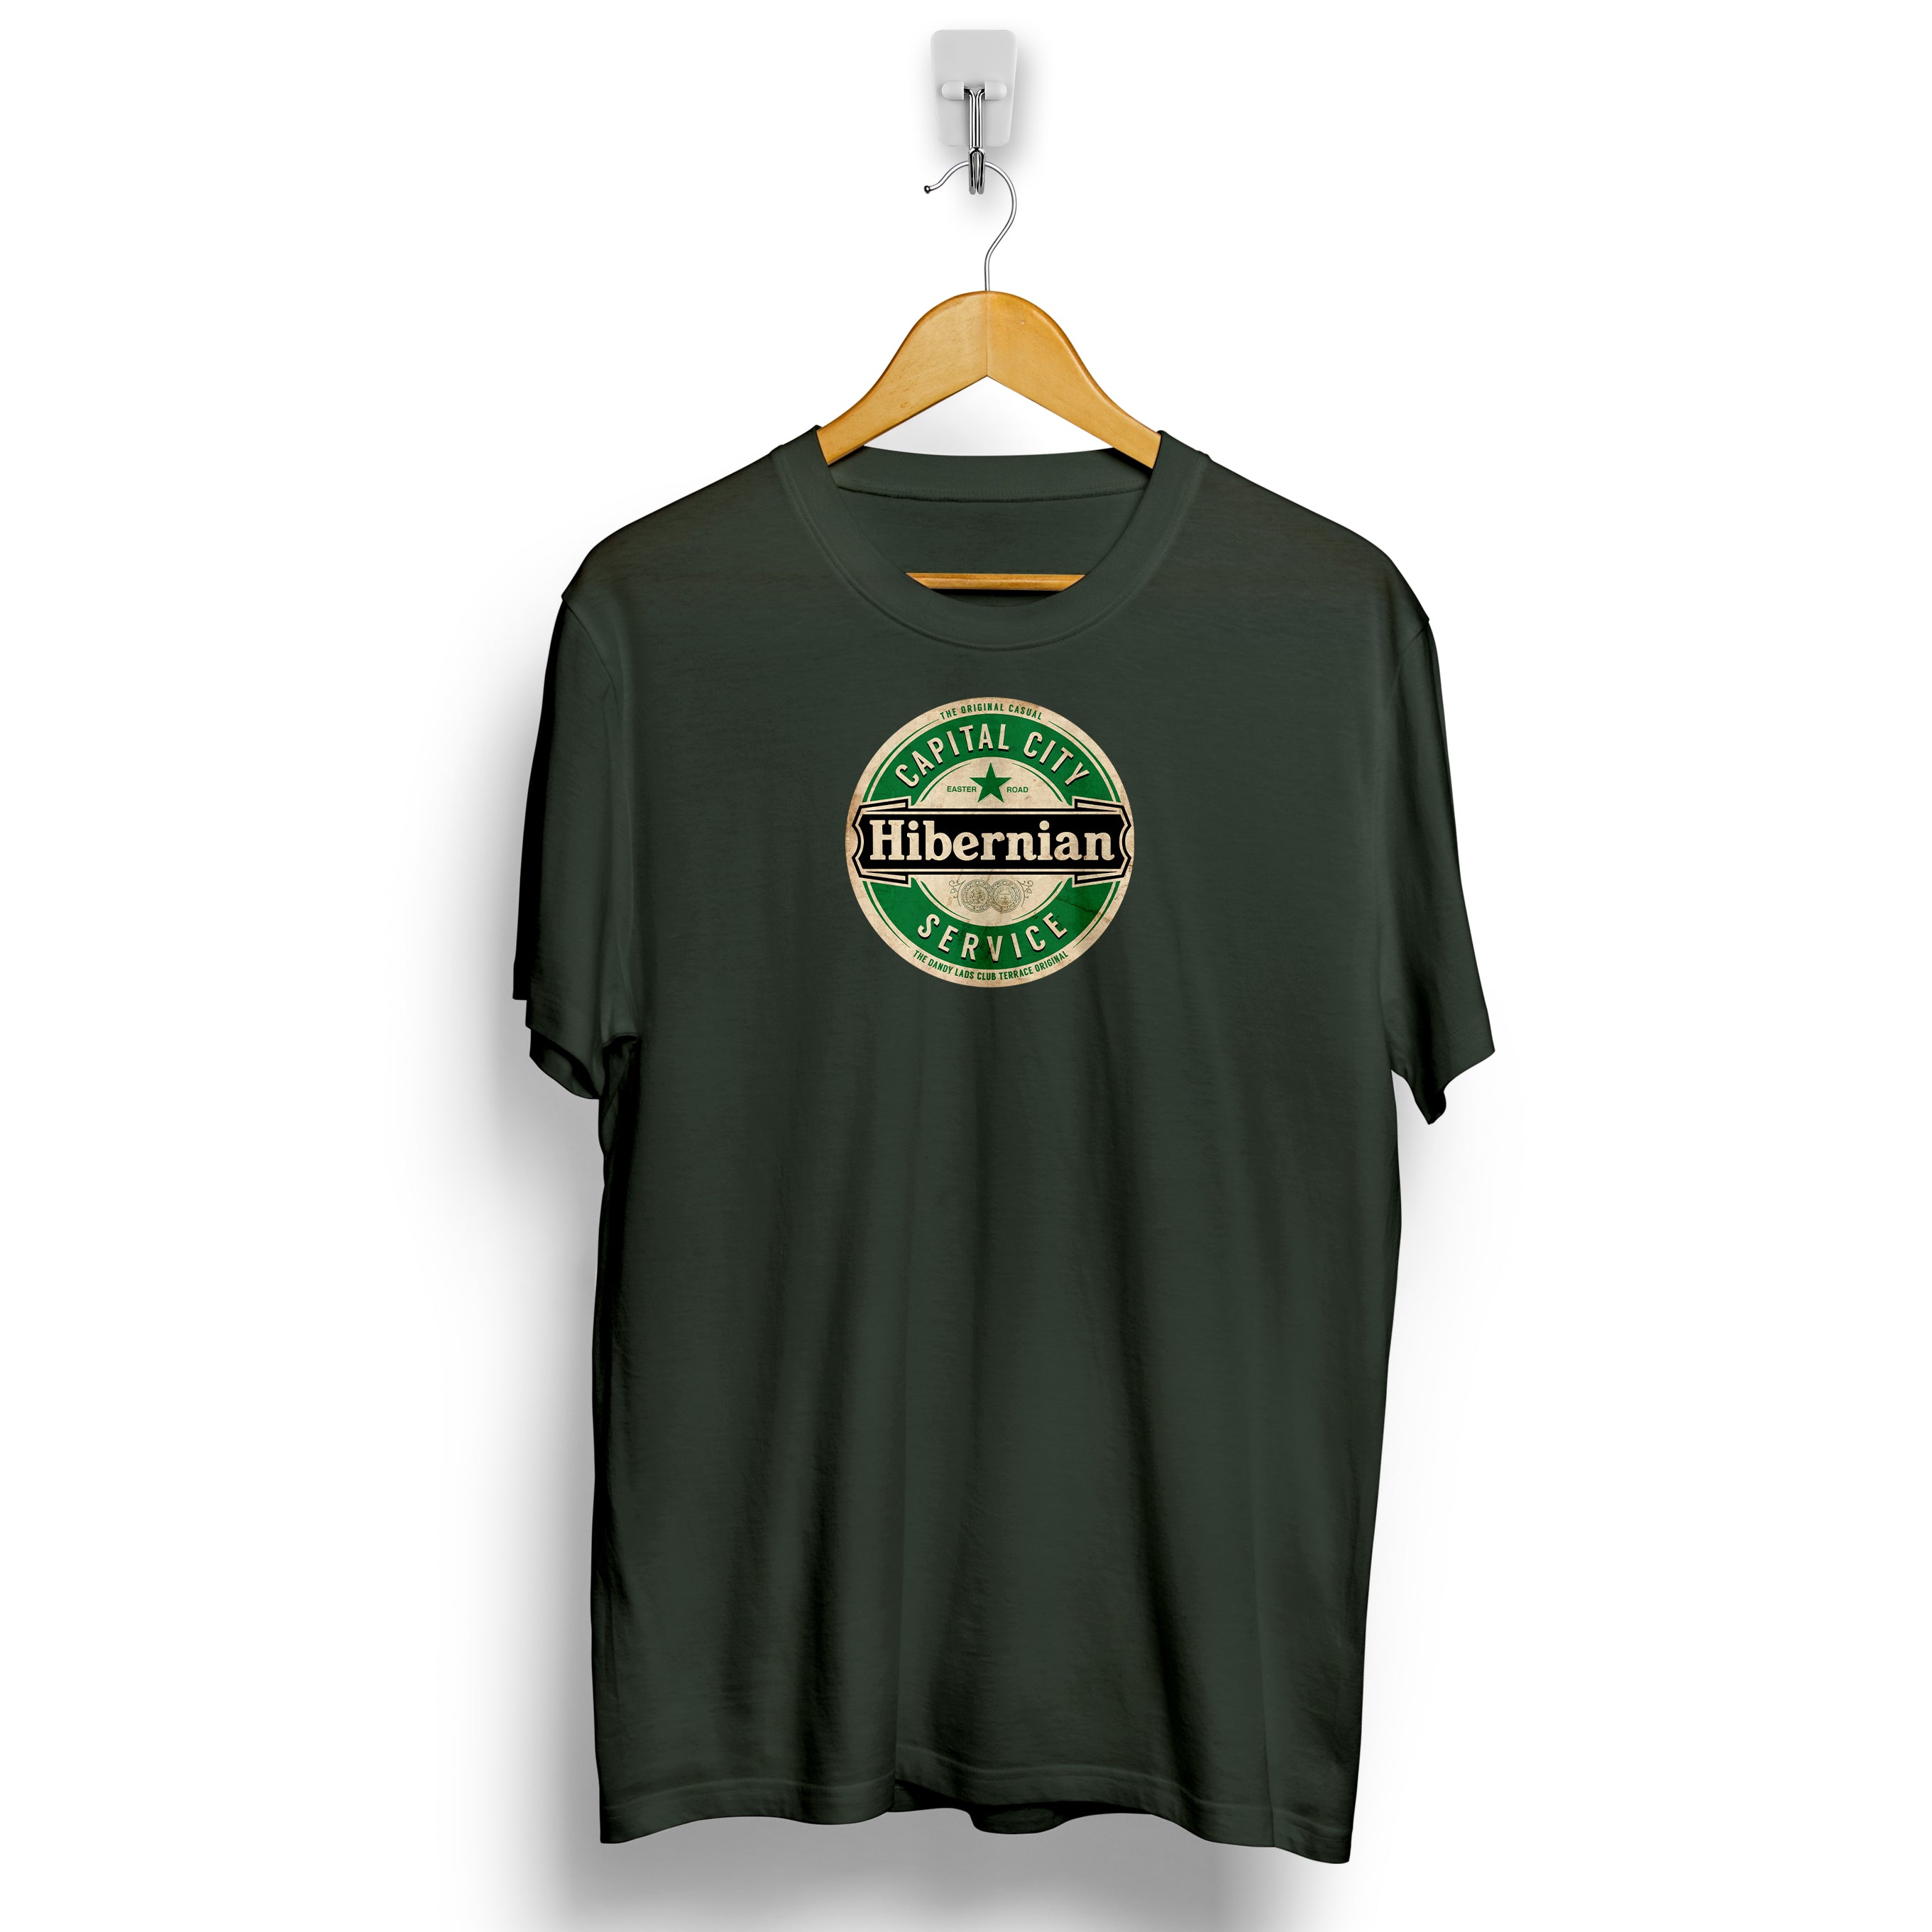 Capital City Service Hibernian Football Casuals T Shirt